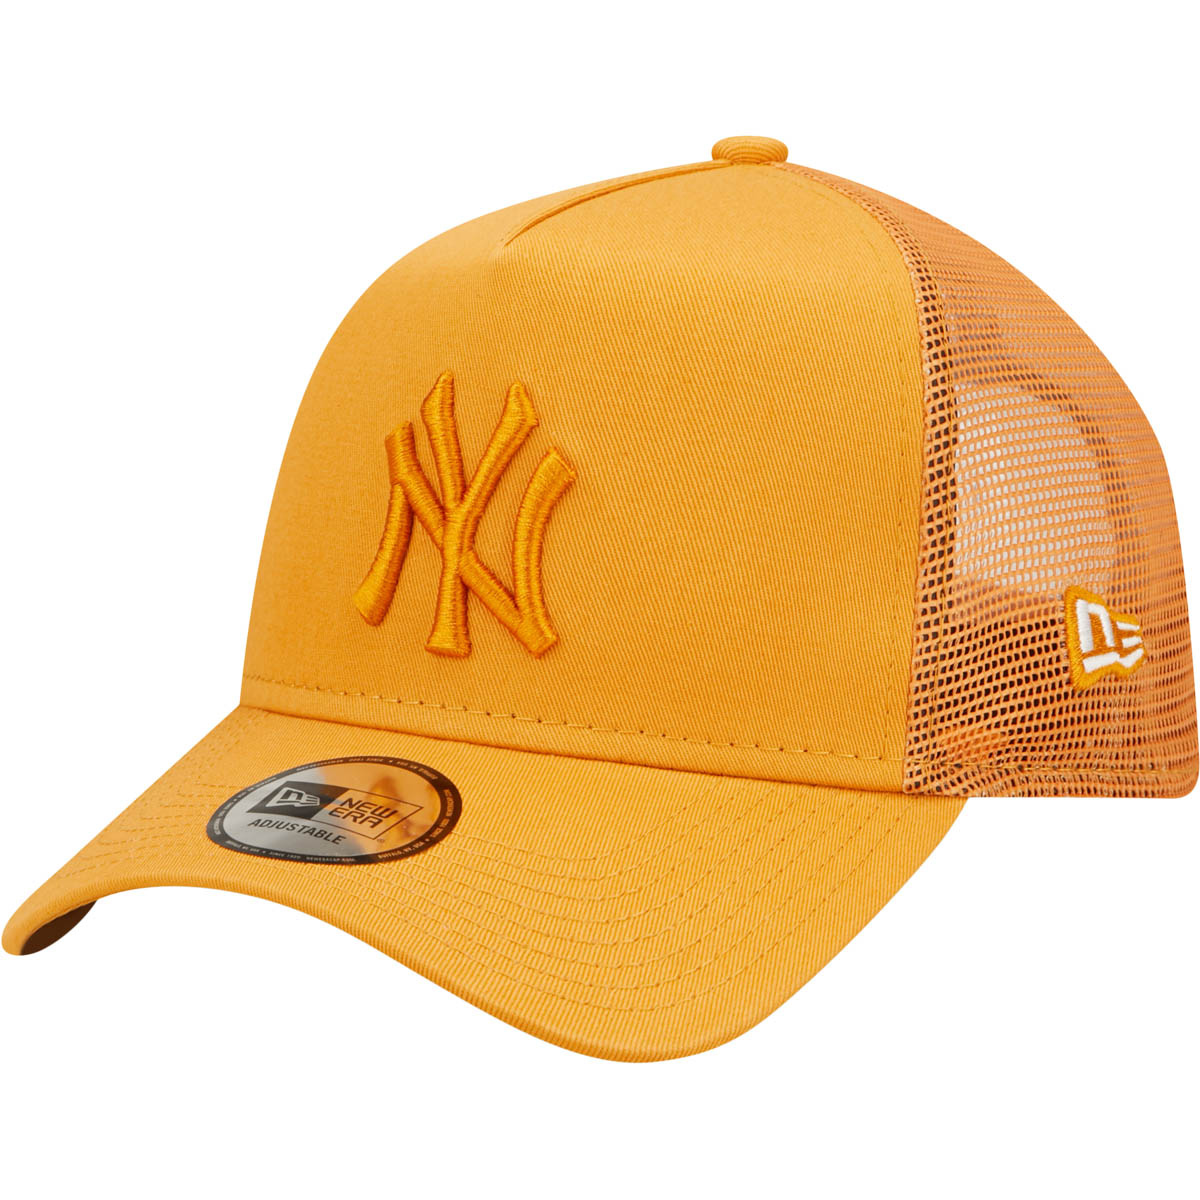 New Era New York Yankees Snapback Cap - ORANGE - str. ONESIZE